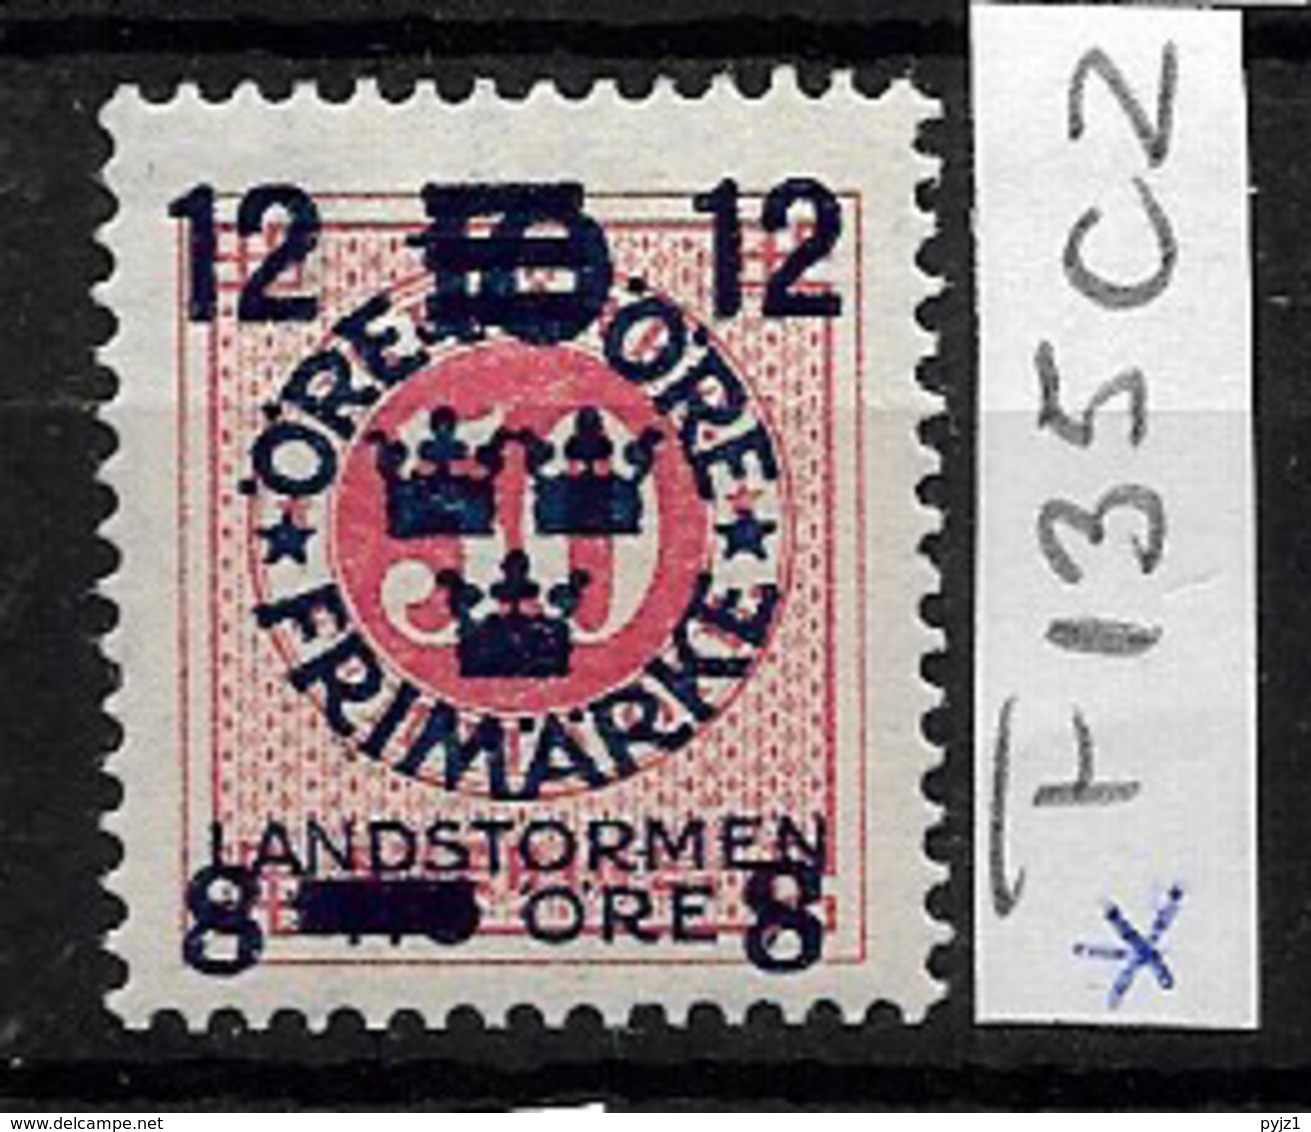 1918 MH Sweden, Landstrom III: Watermark KPV - Unused Stamps